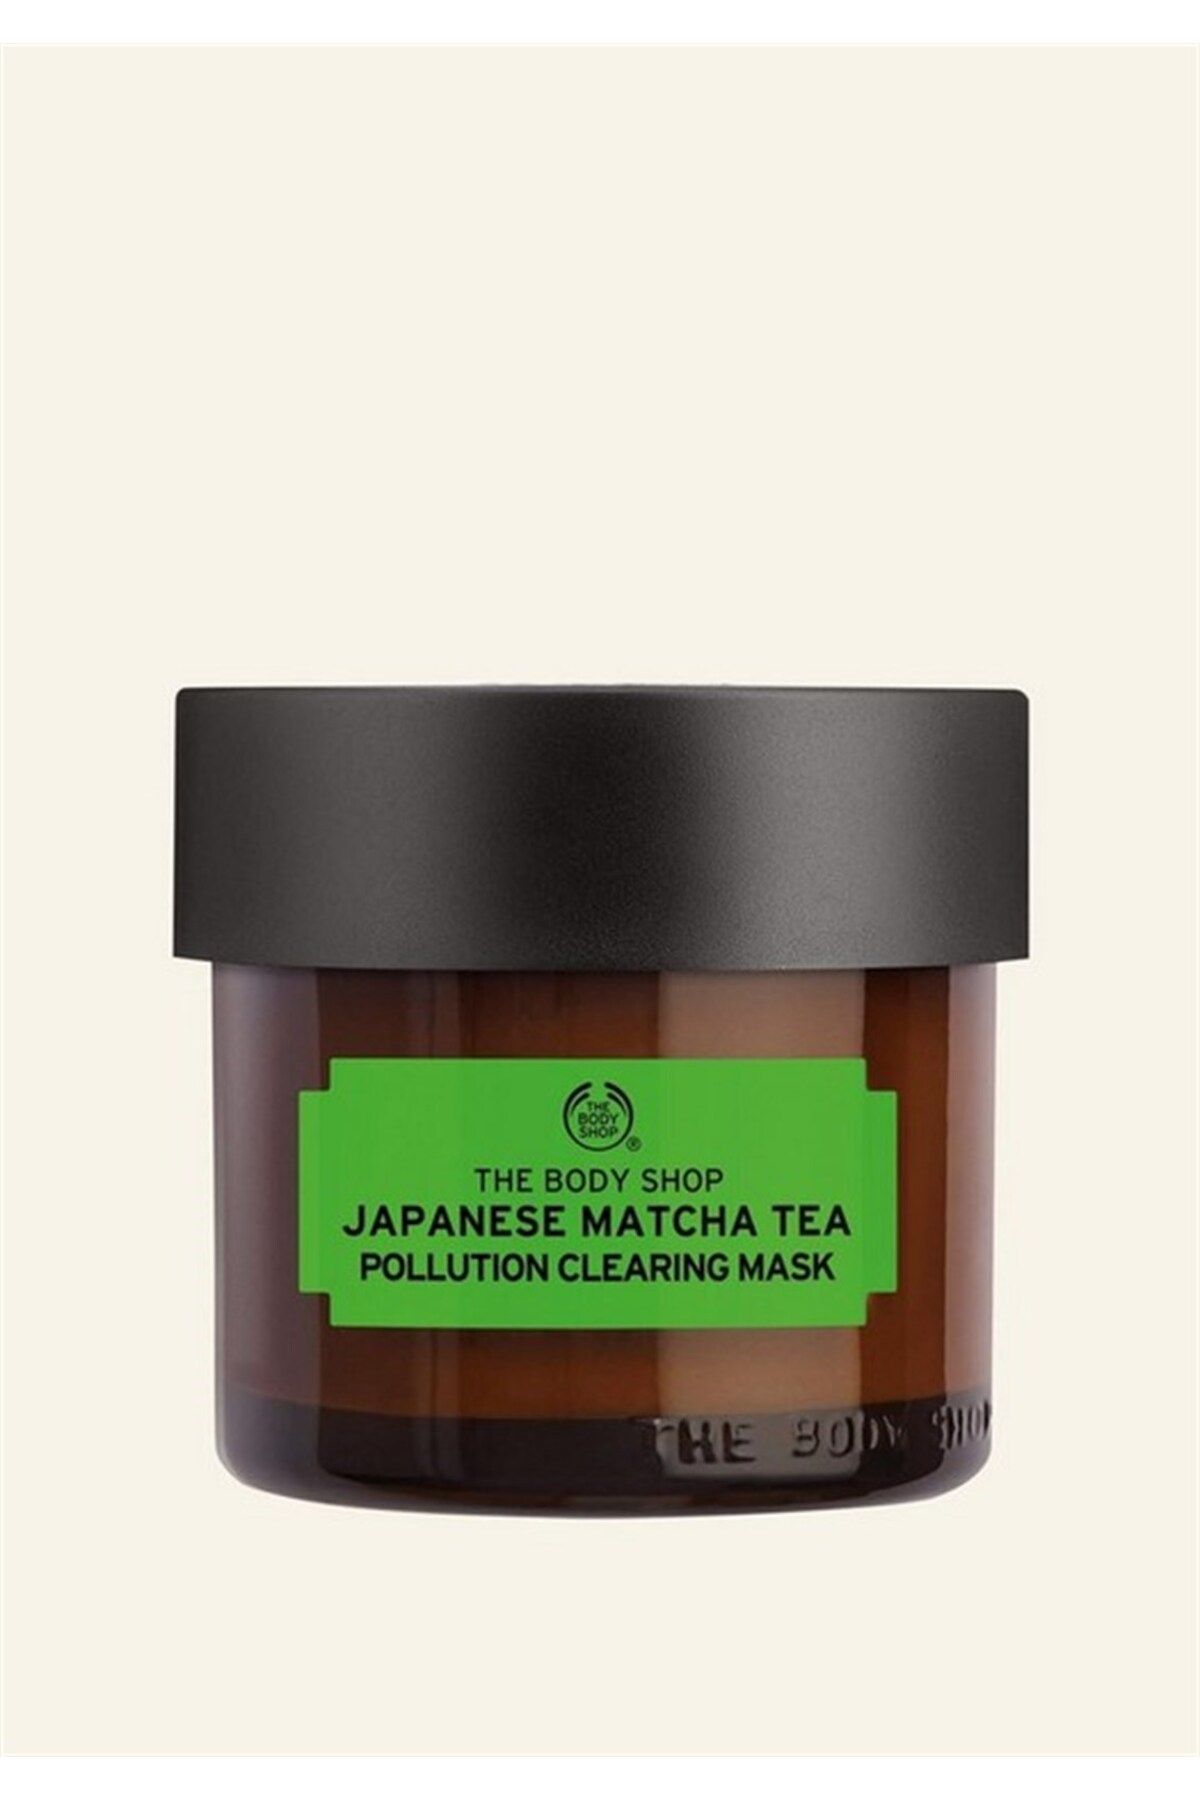 THE BODY SHOP ماسک صورت ژاپنی چای سبز Matcha با عملکرد آبرسانی 75 میلی لیتر